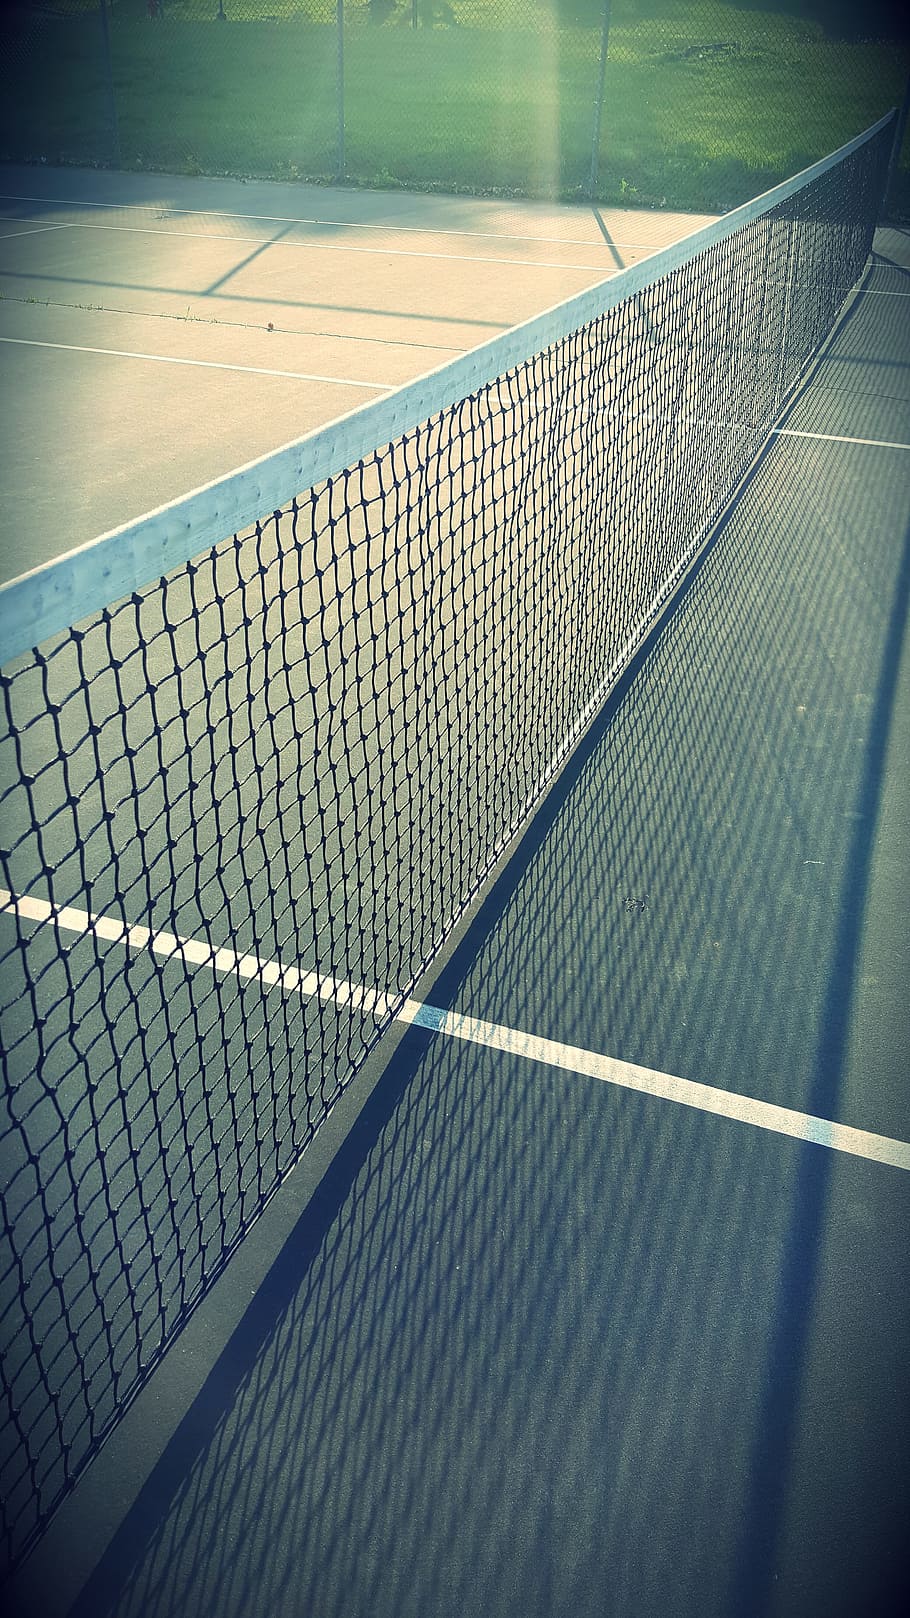 White Tennis Net on a Ground, court, sport, tennis court, net - sports equipment